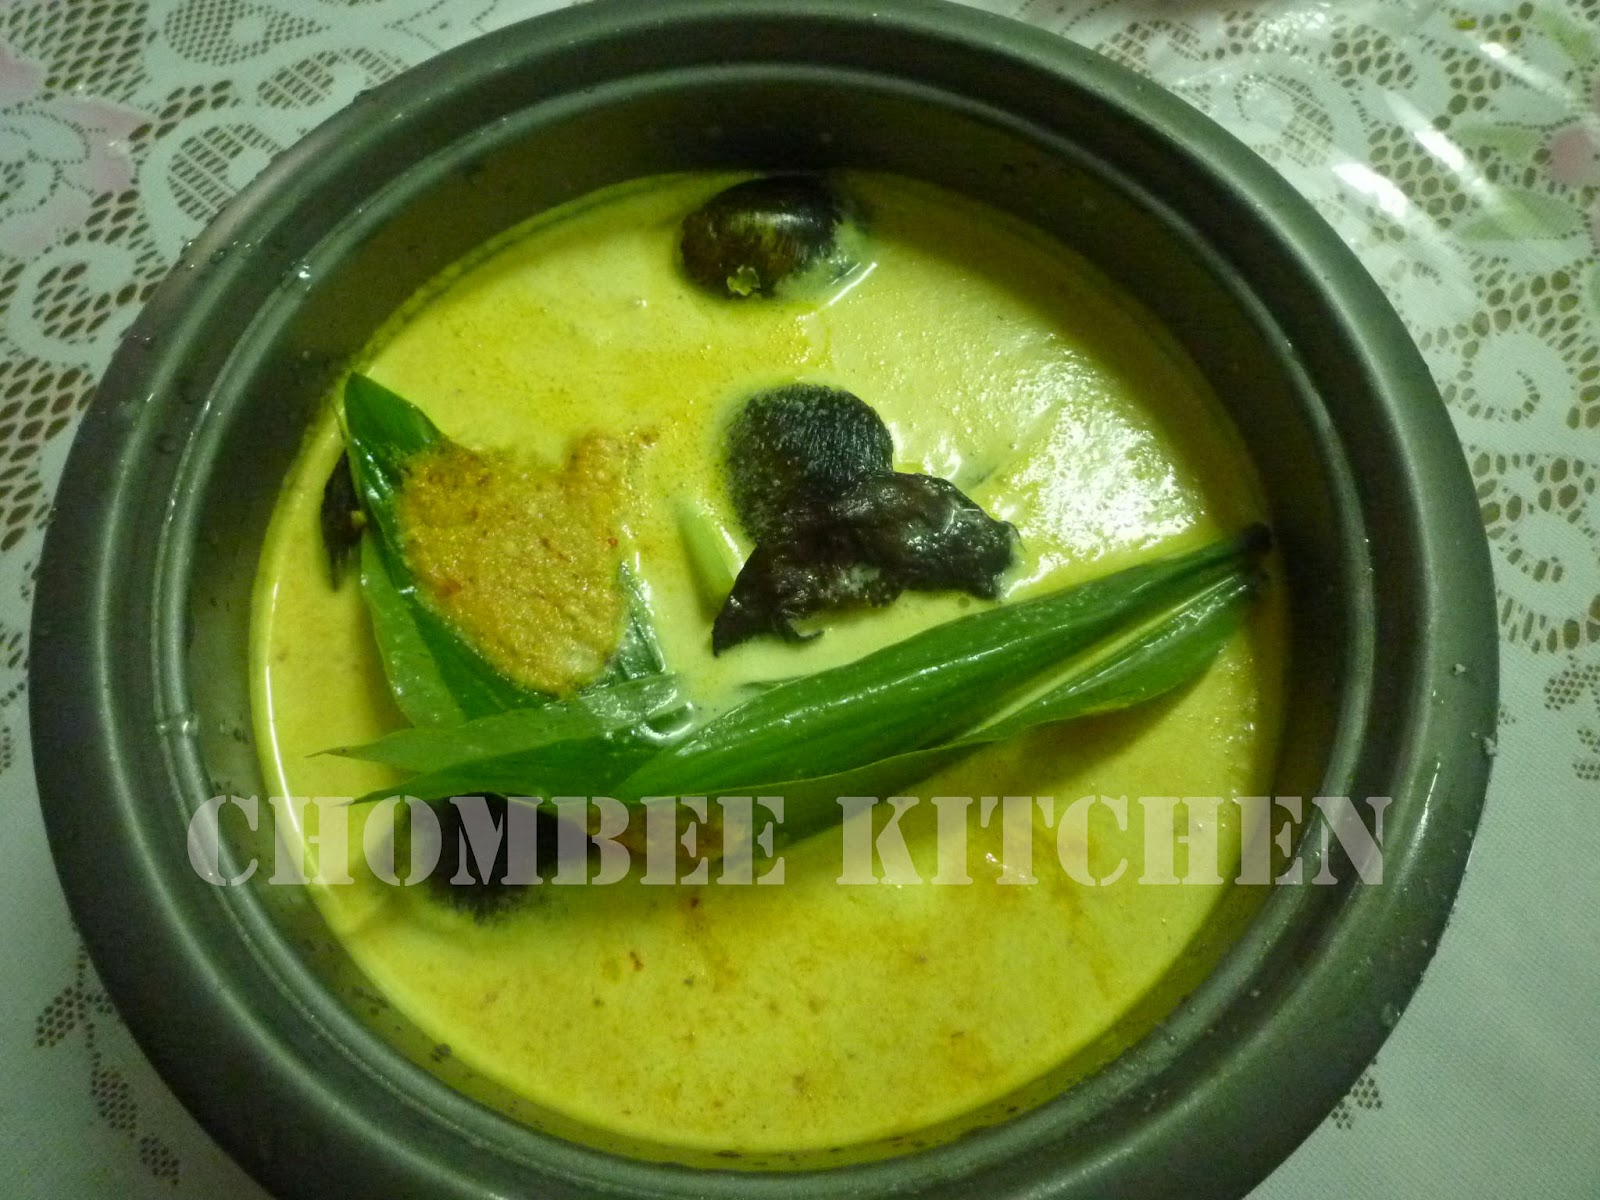 Chombee Kitchen @ Resepi, Tips Masakan dan Petua: Lokan 